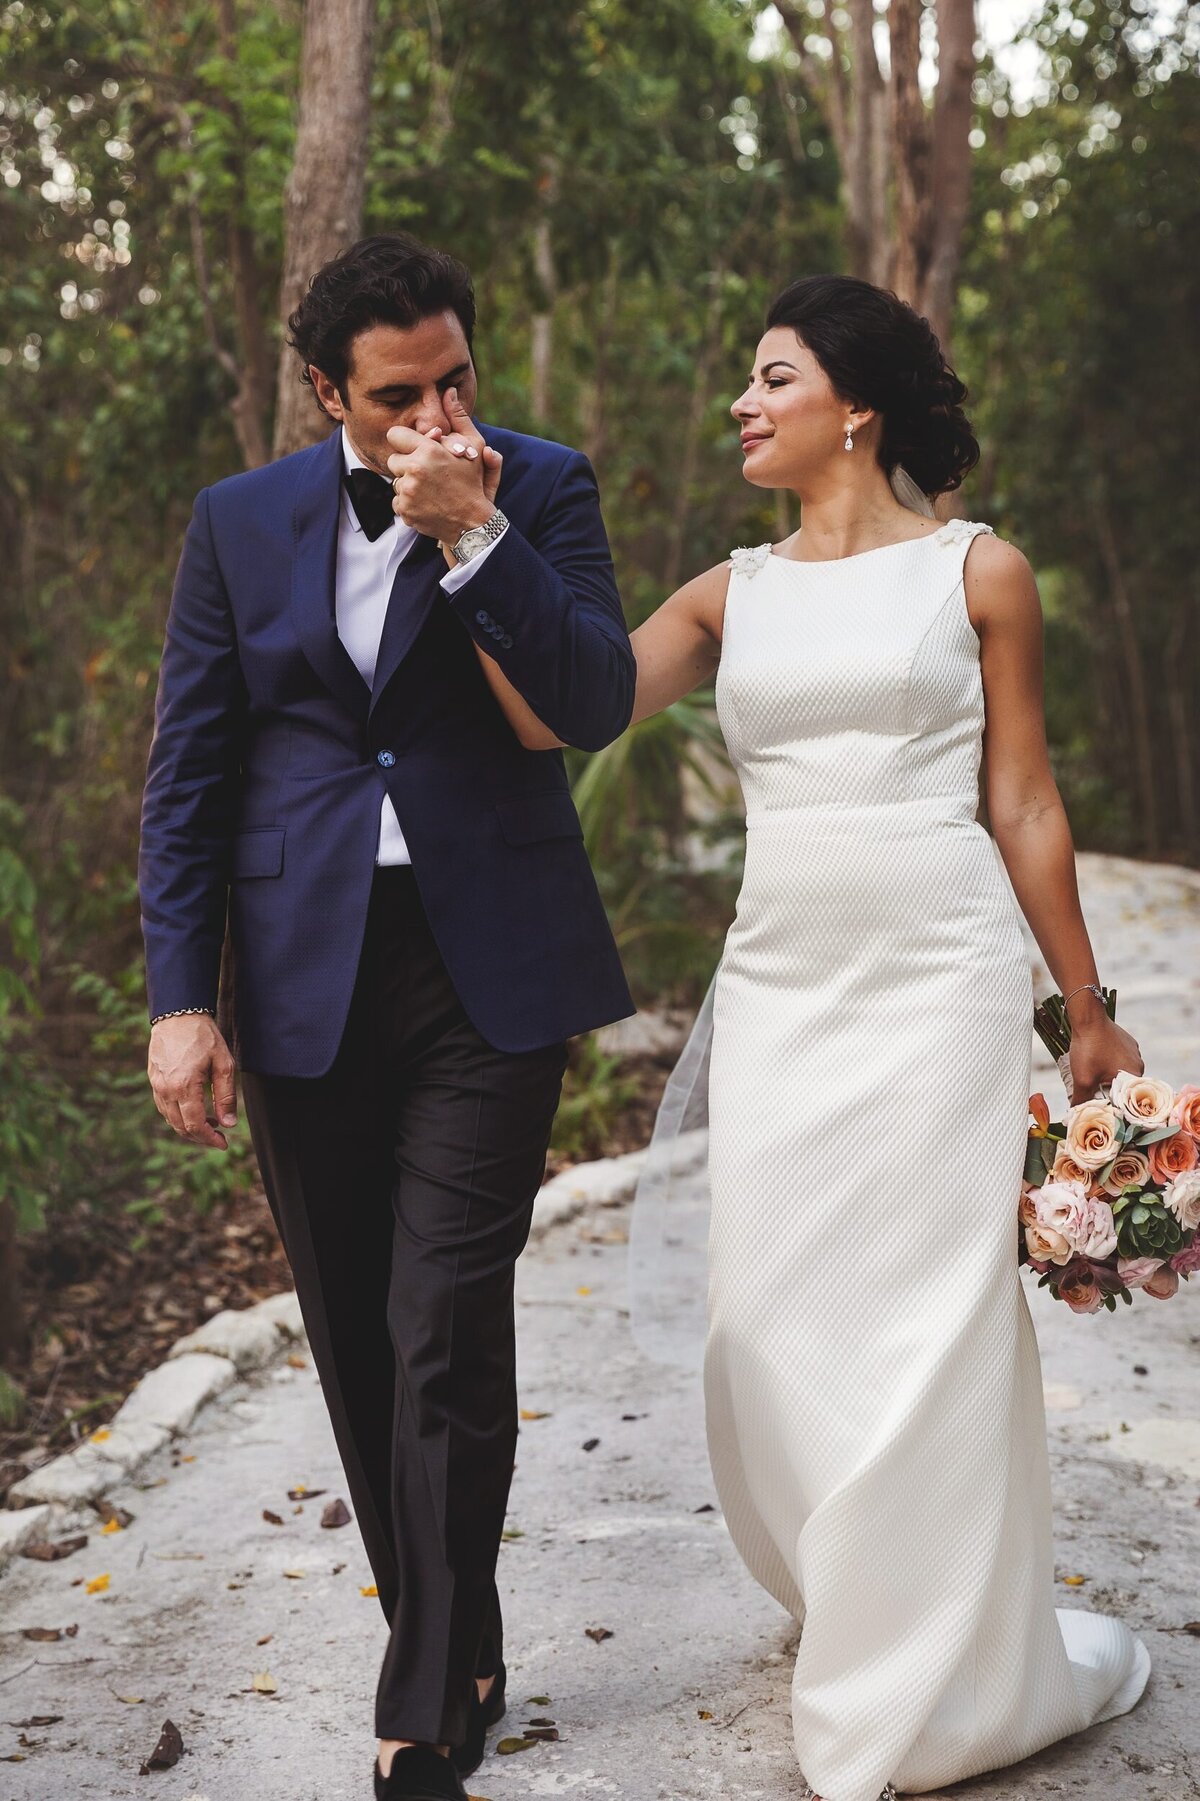 Groom kisses brides hand as they walk down path in Riviera Maya